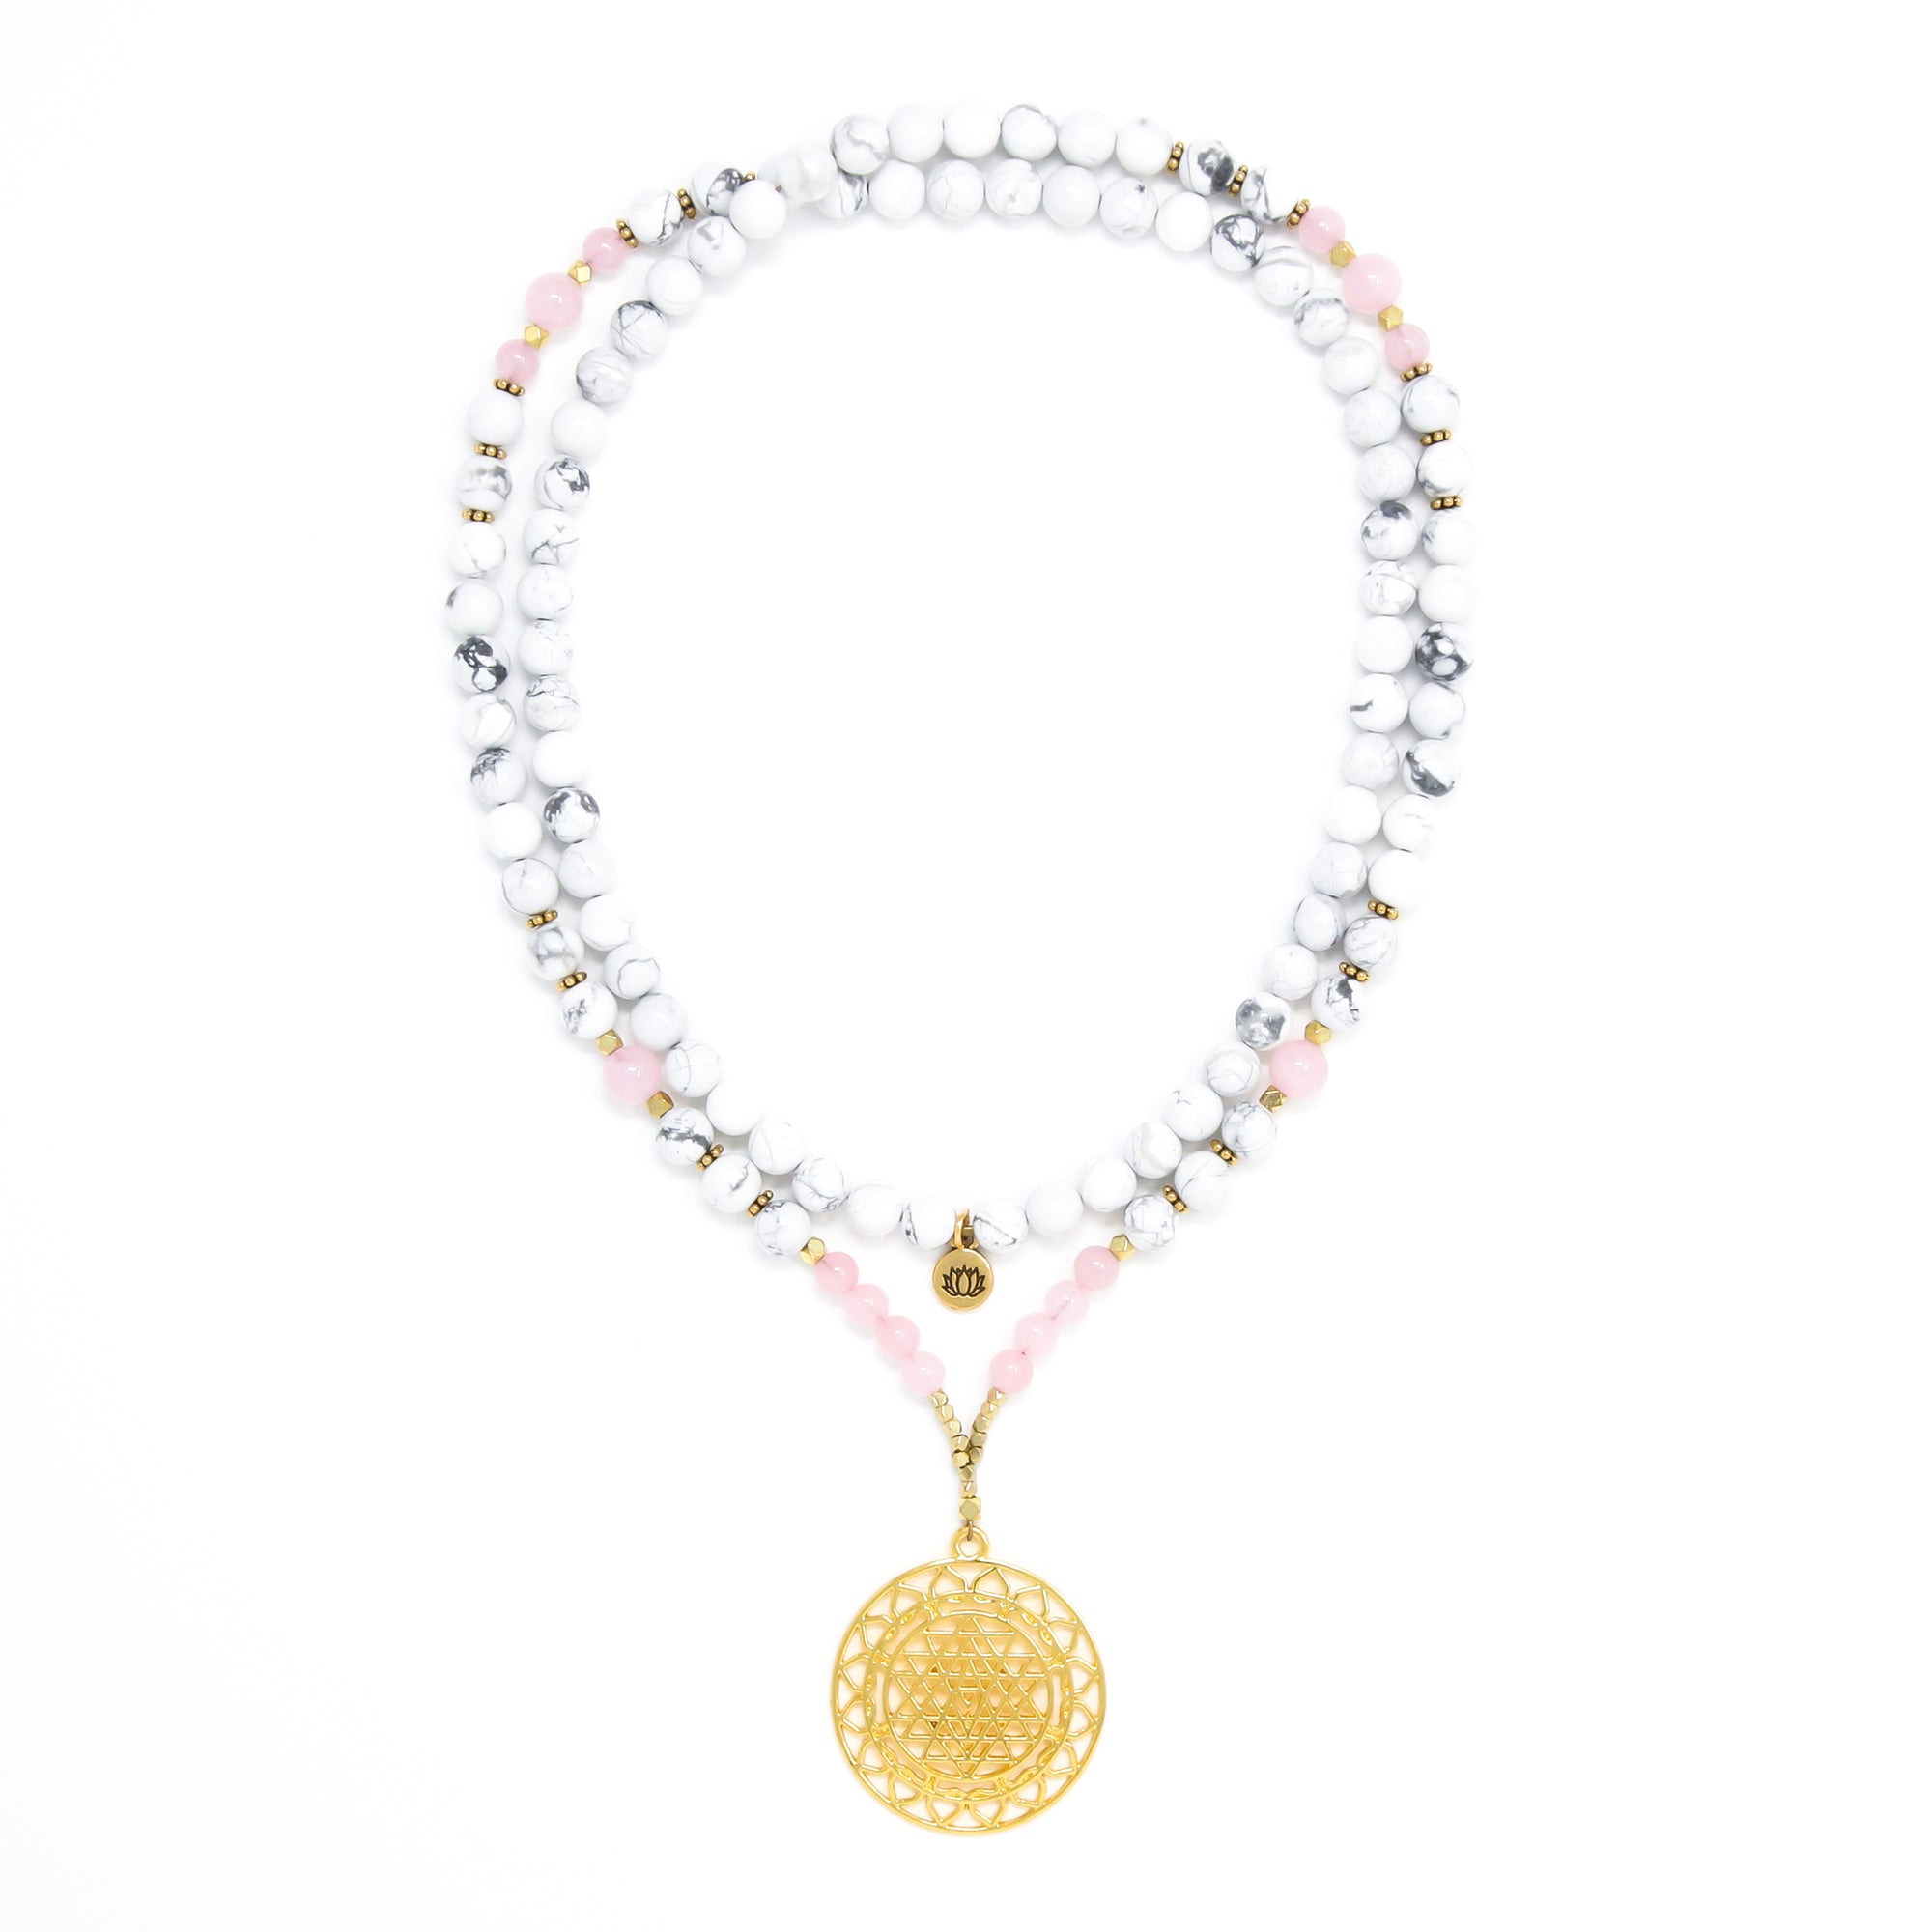 Howlite and Rose Quartz Mala Necklace with Gold Sri Yantra Pendant, white, pink and gold mala prayer beads, spiritual jewelry